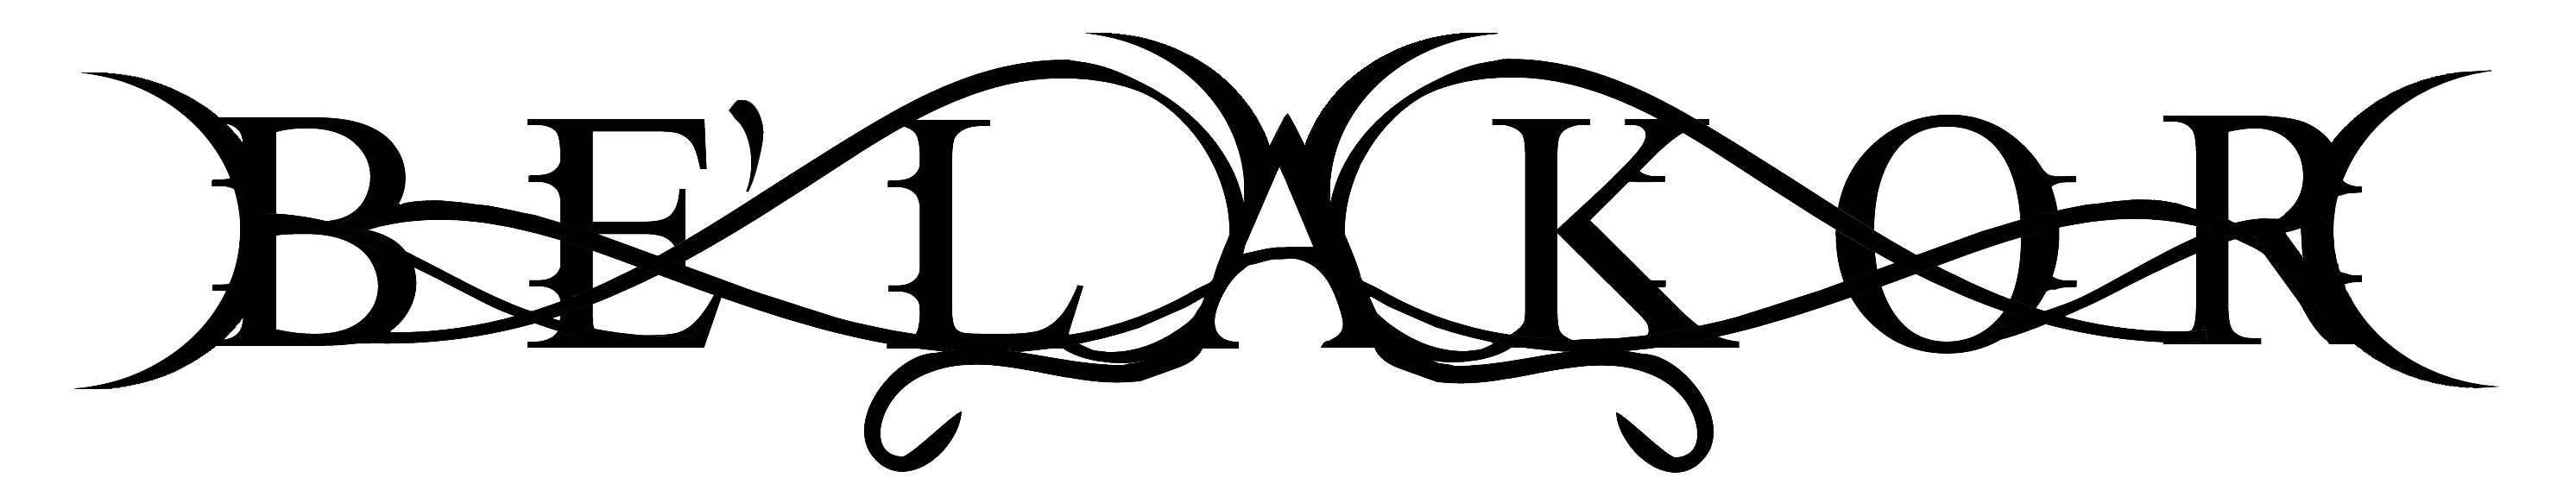 Be'lakor - Logo